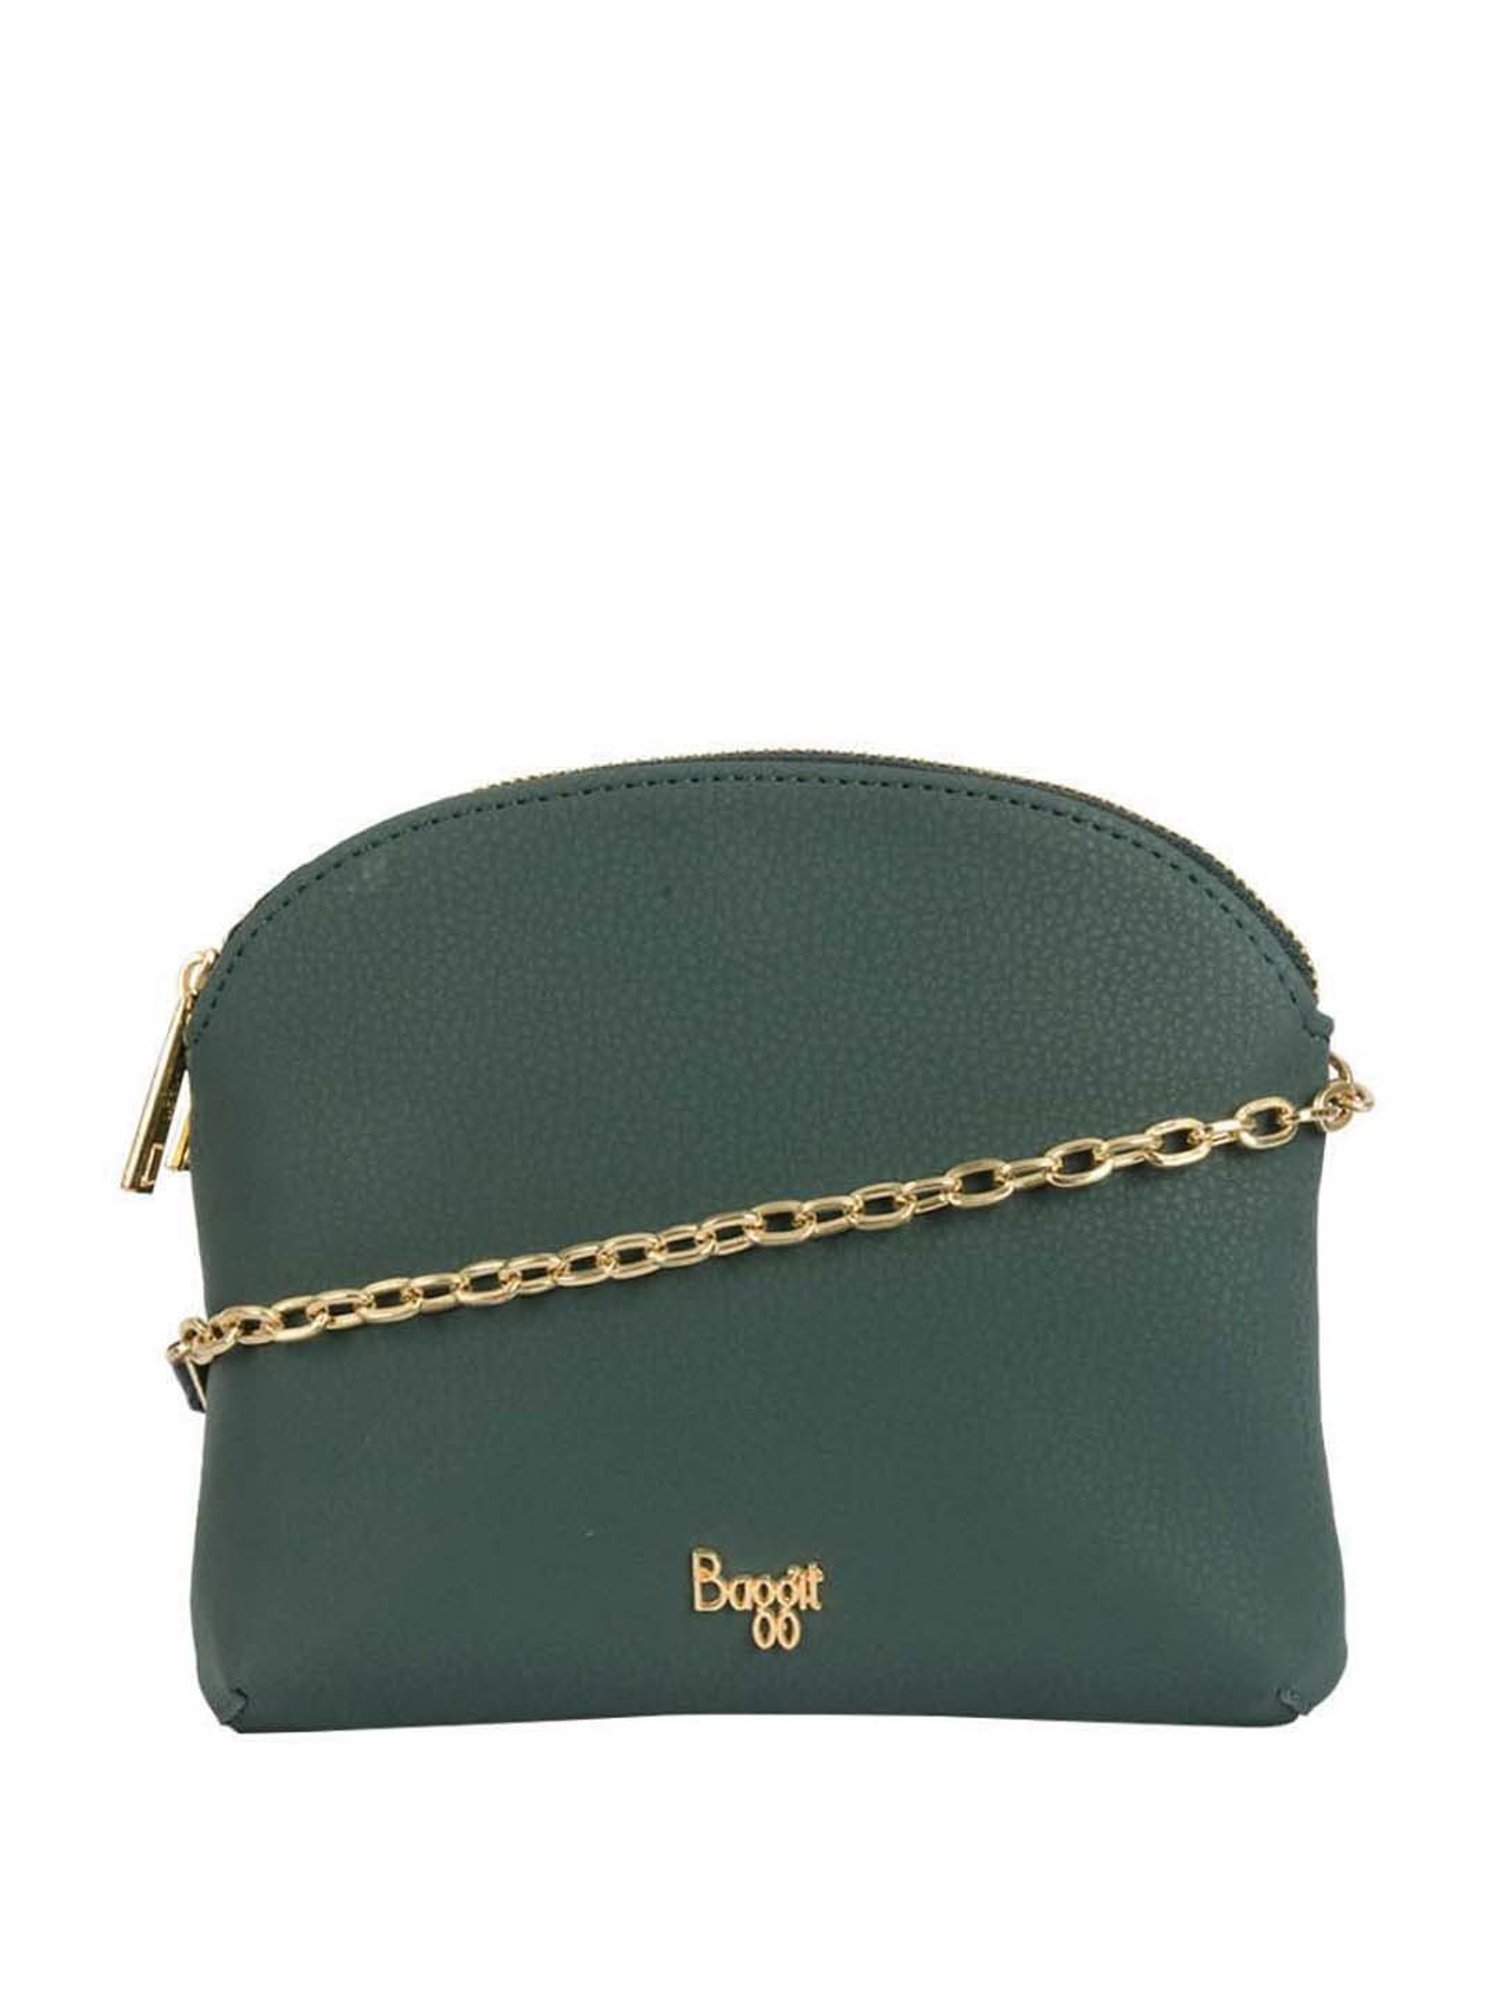 Baggit Handbags Below 500 - Buy Baggit Handbags Below 500 online in India